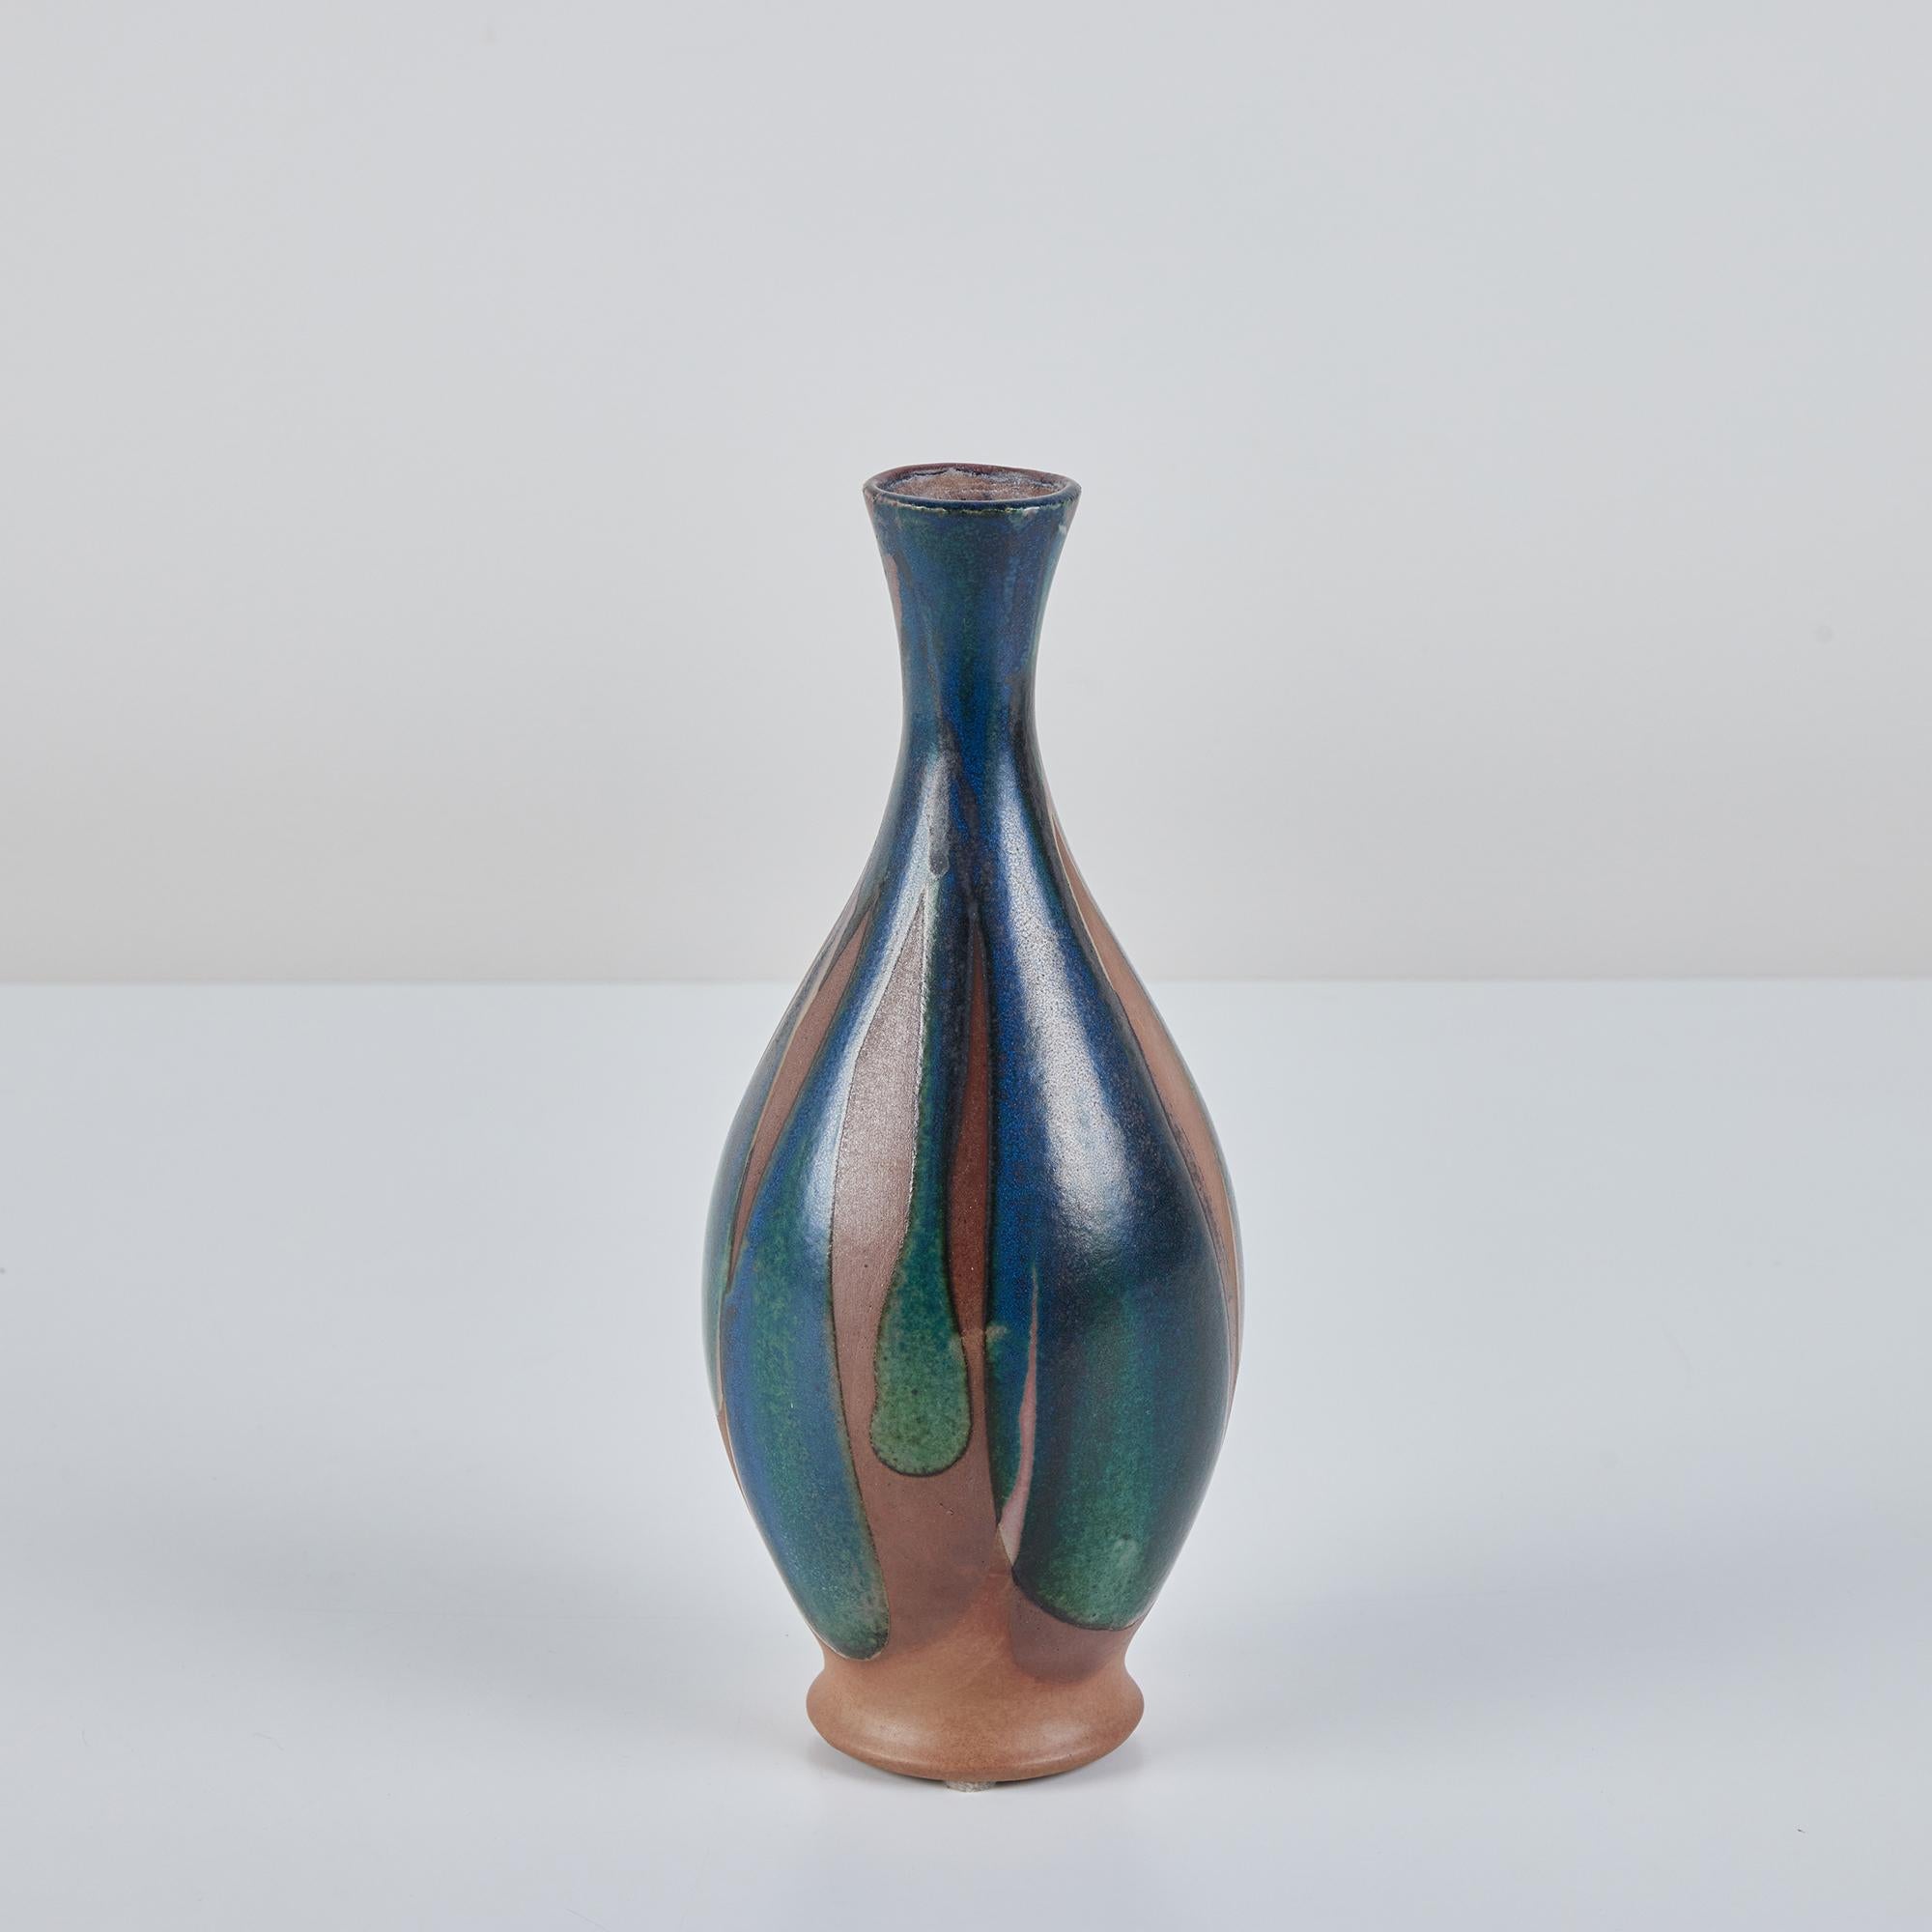 Hand thrown stoneware bud vase by California ceramicist Robert Maxwell. The vase has a blue green drip glaze allover a warm brown stoneware vessel.
Labeled - Robert Maxwell Stoneware Handcrafted Designs.

Dimensions
4.75